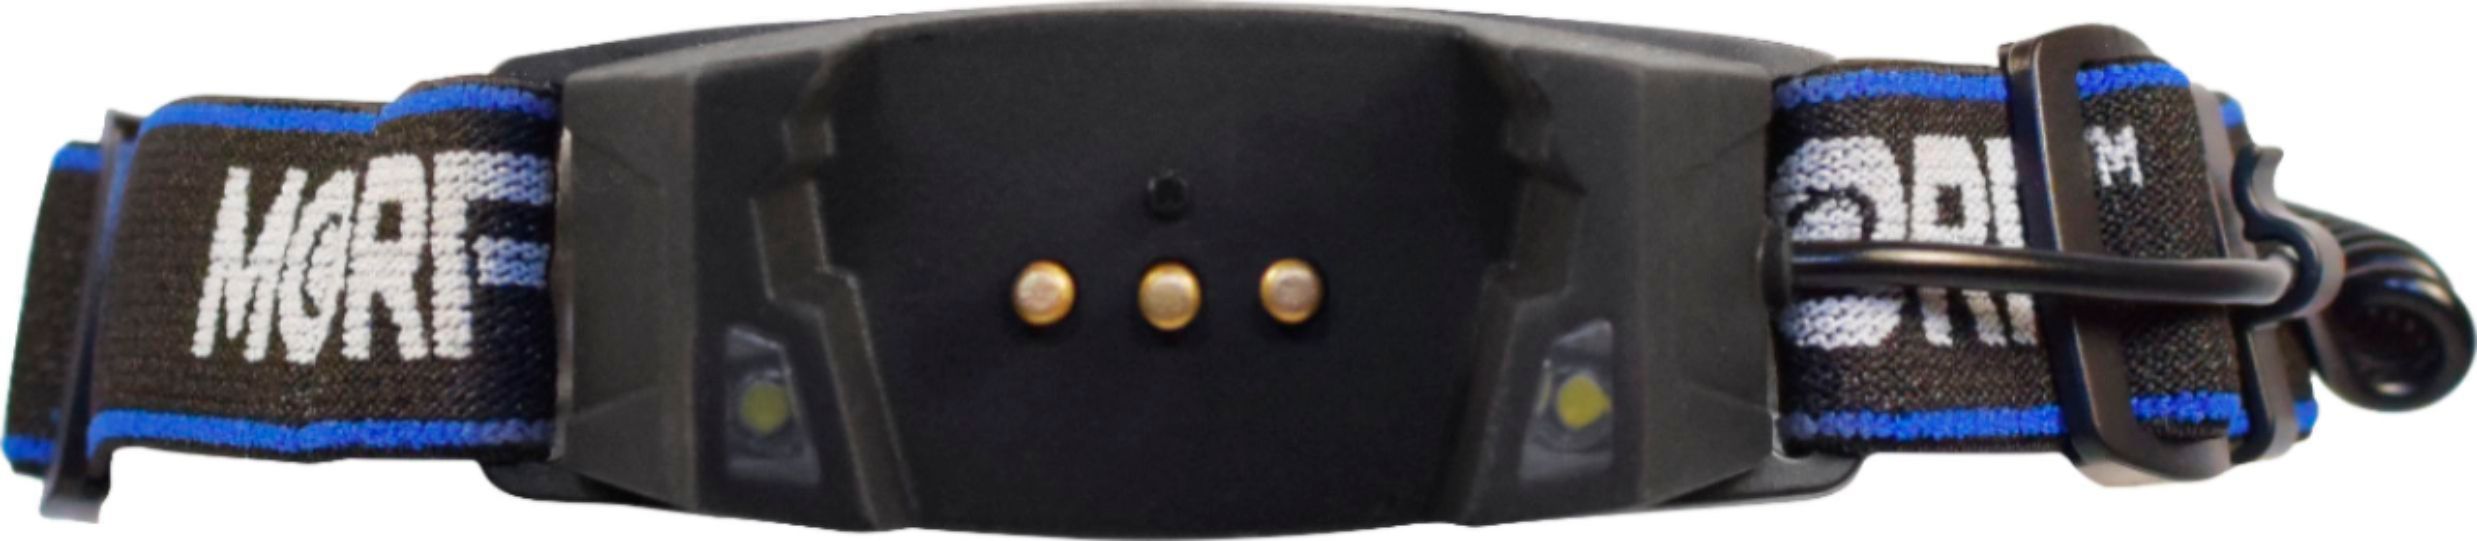 Left View: Police Security - MORF R230 Headlamp - Black